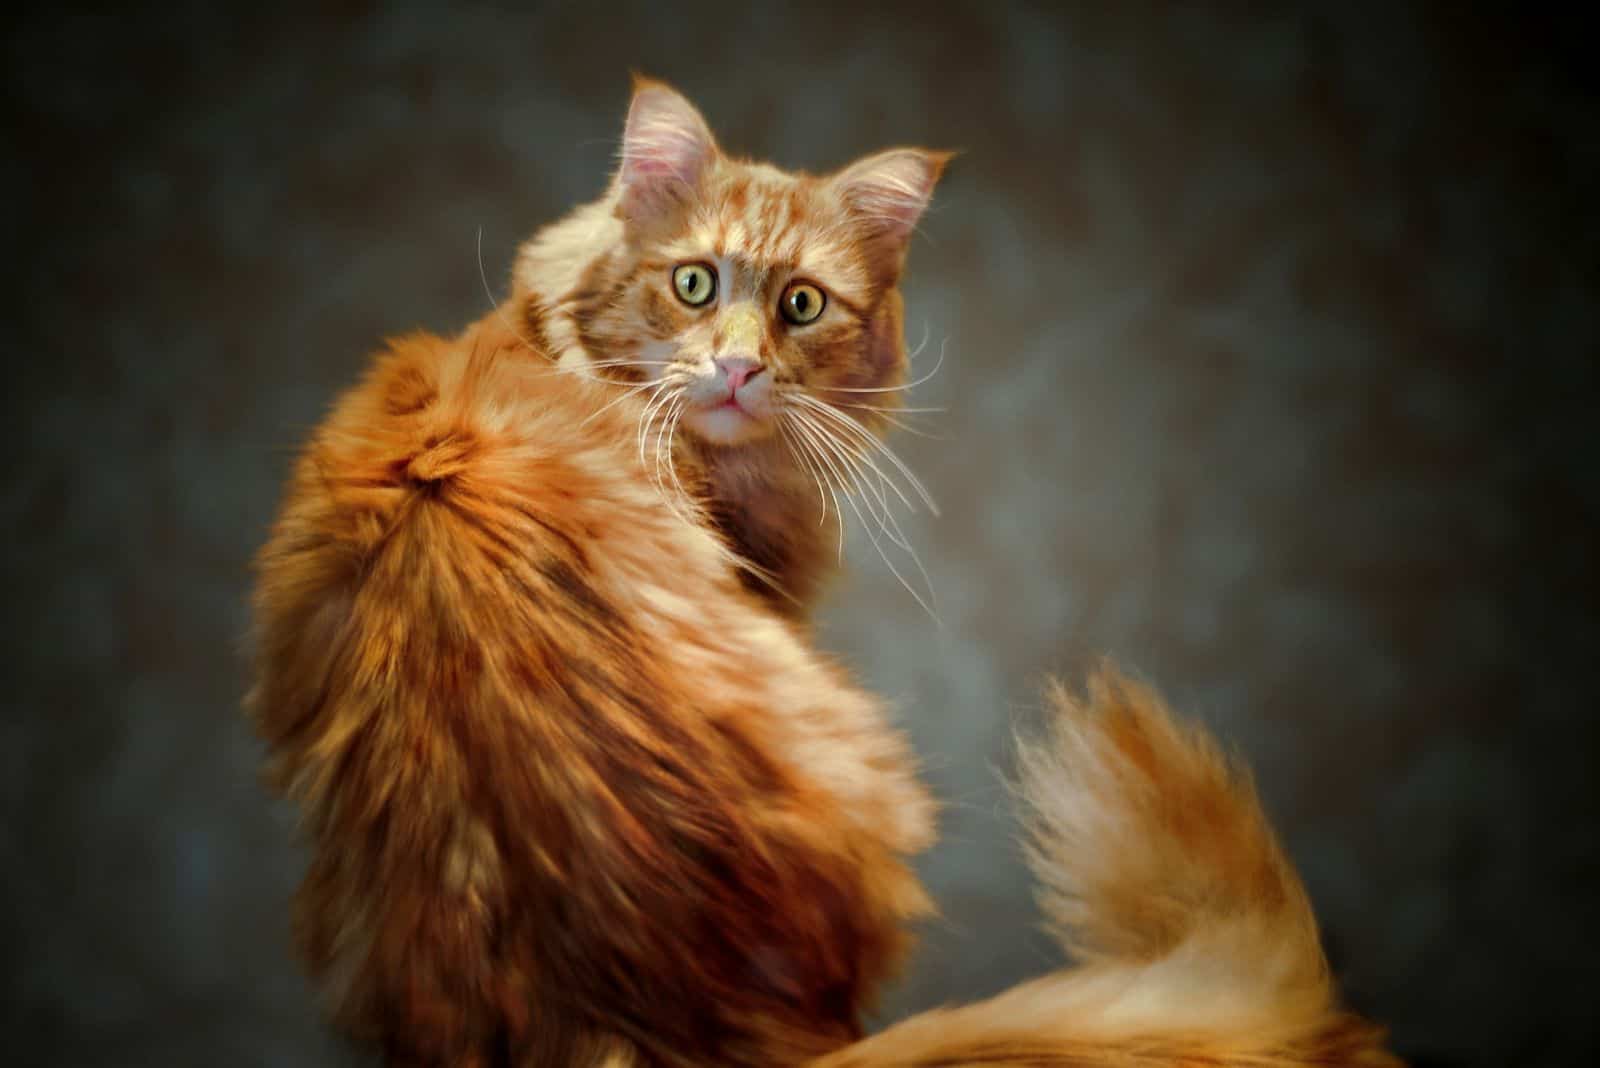 ginger cat sitting